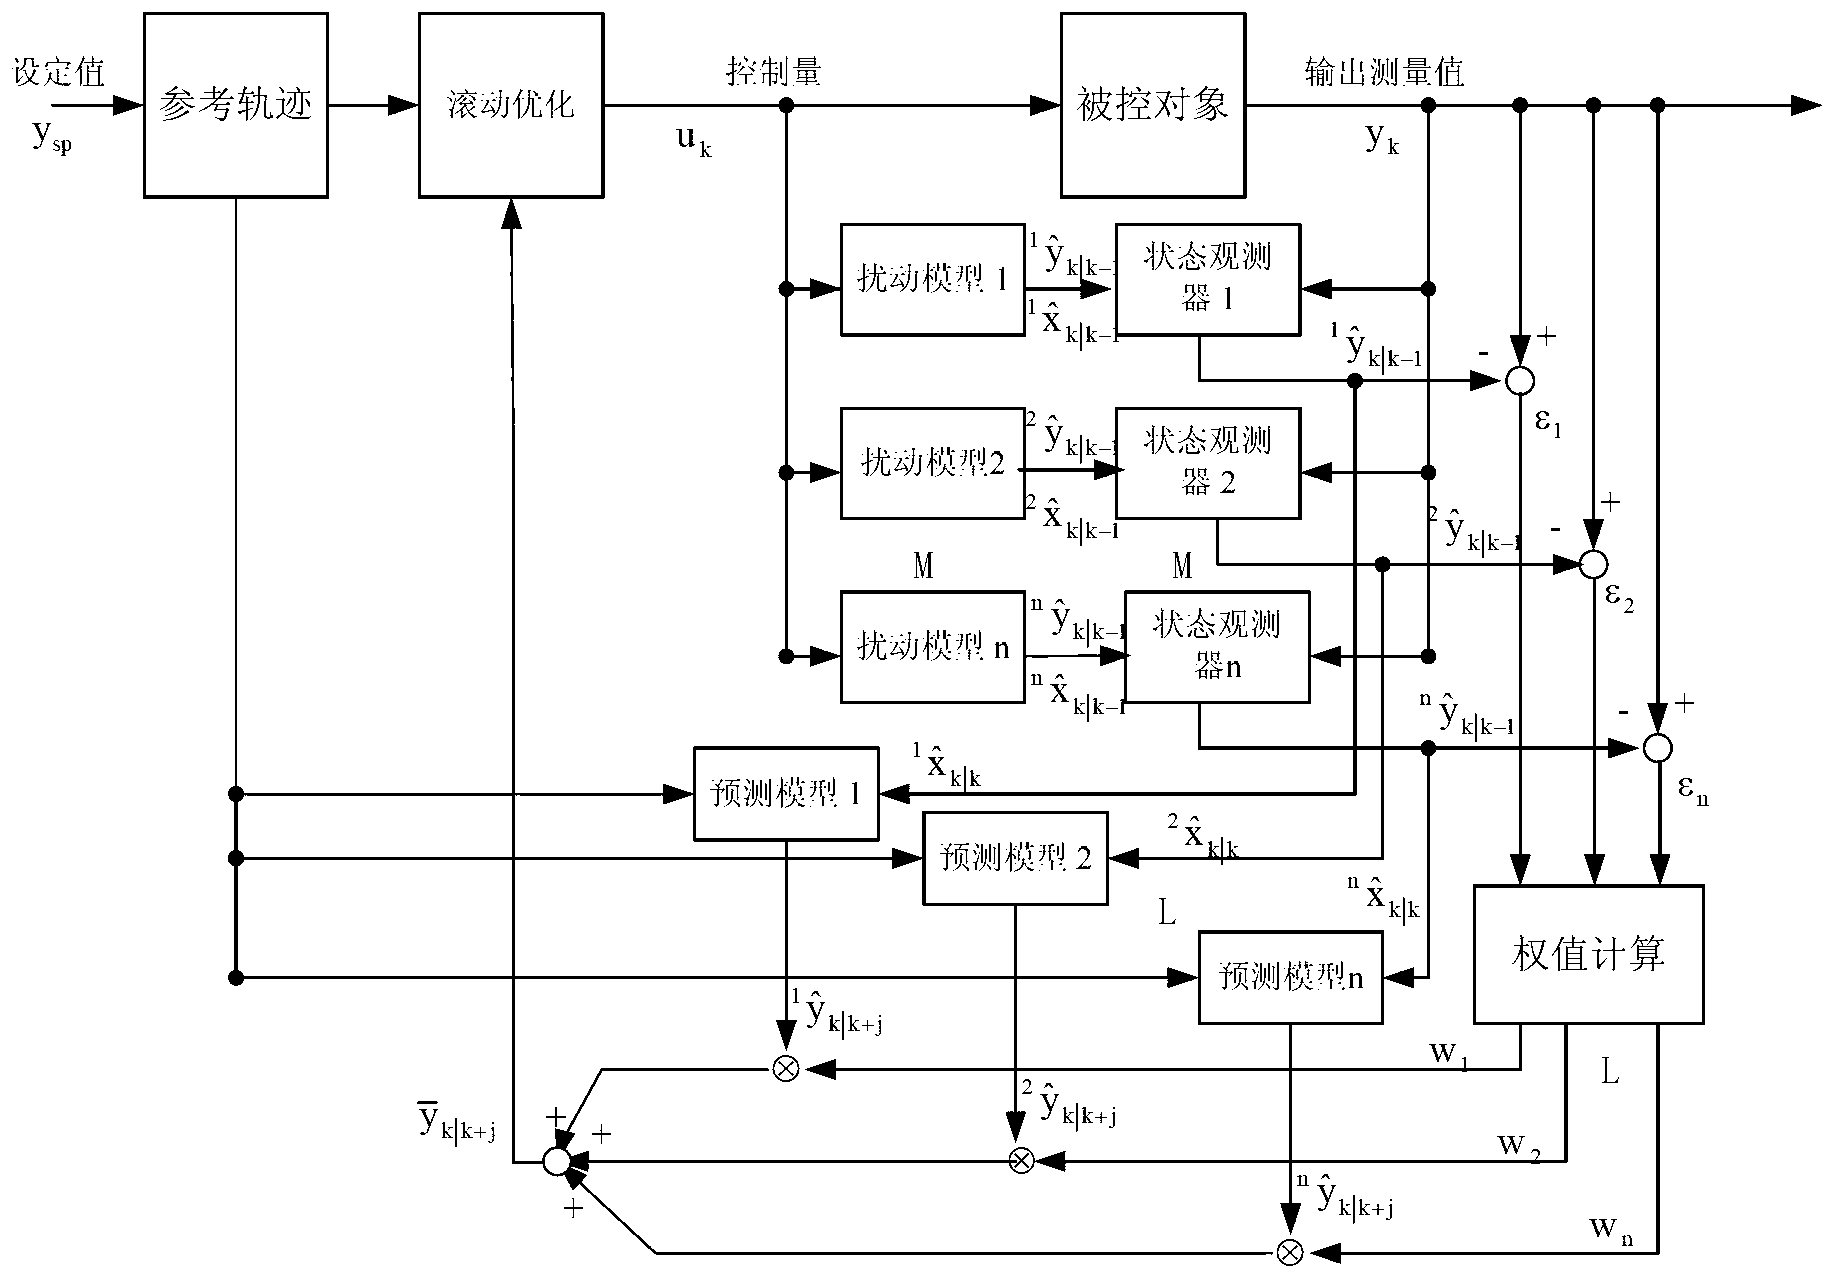 Multi-model disturbance estimation predictive-control method for superheated steam temperature of thermal power generating unit